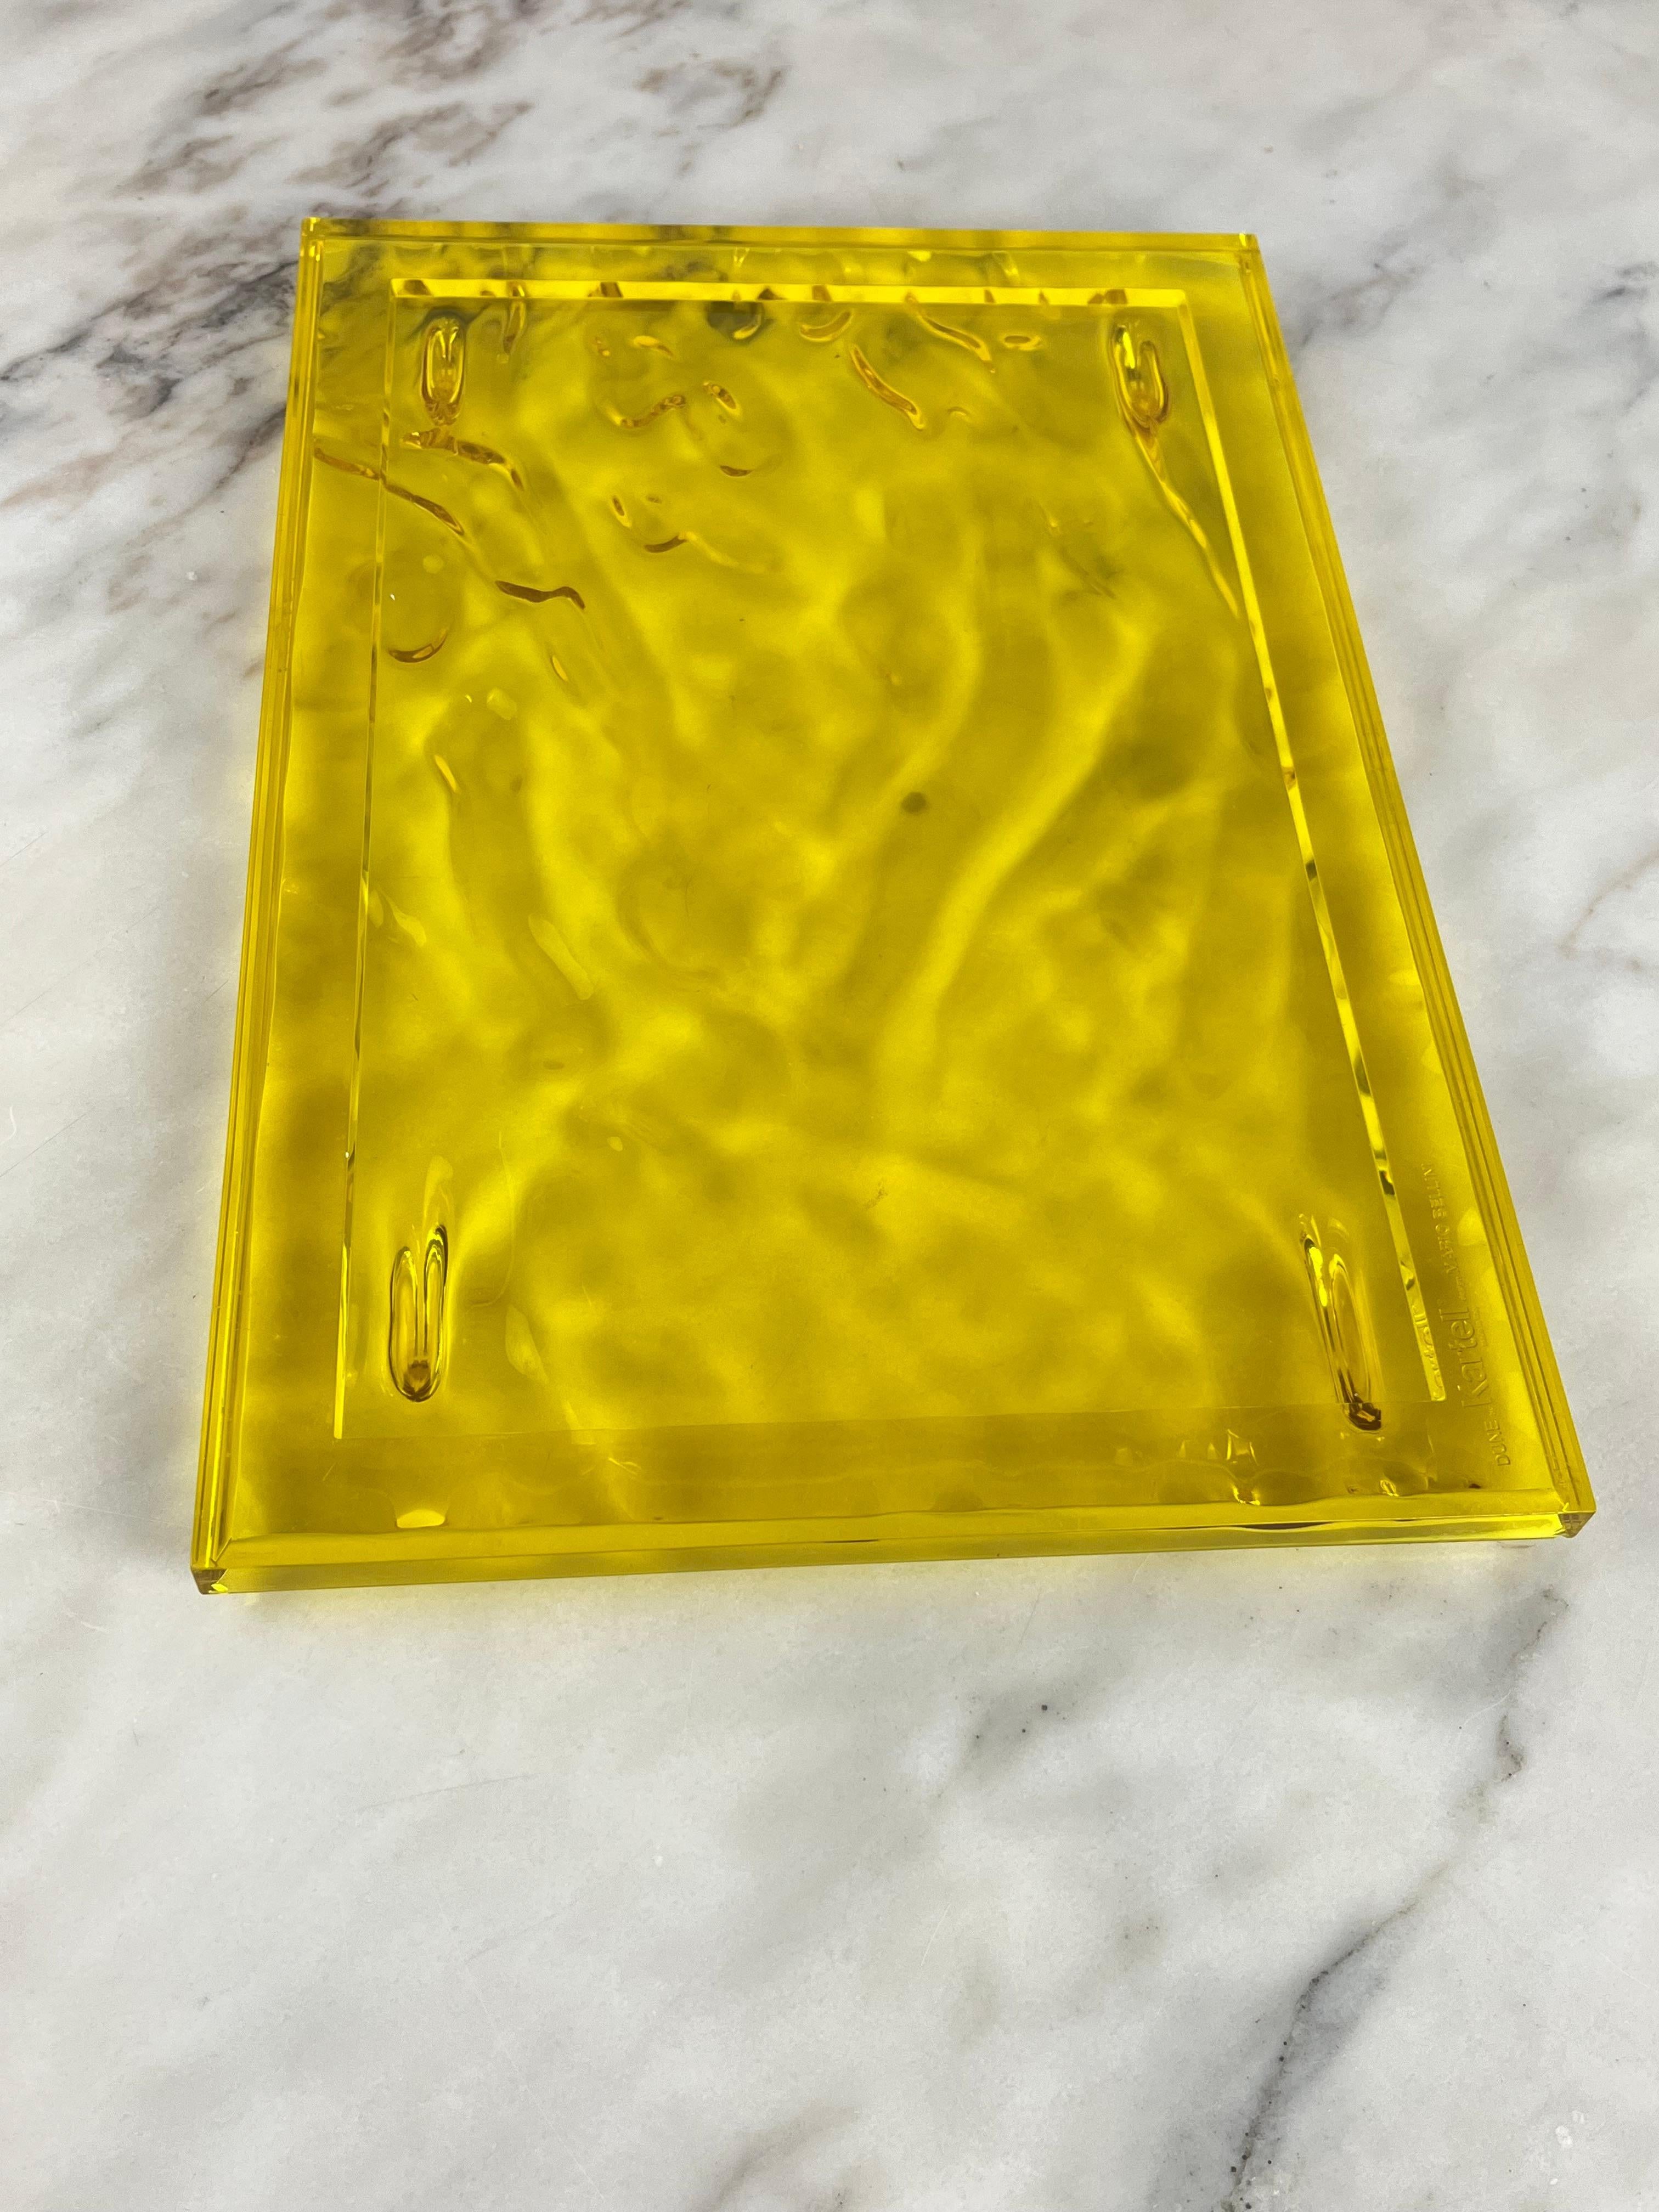 Plastic Kartell Modern Tray By Mario Bellini Italian Design 